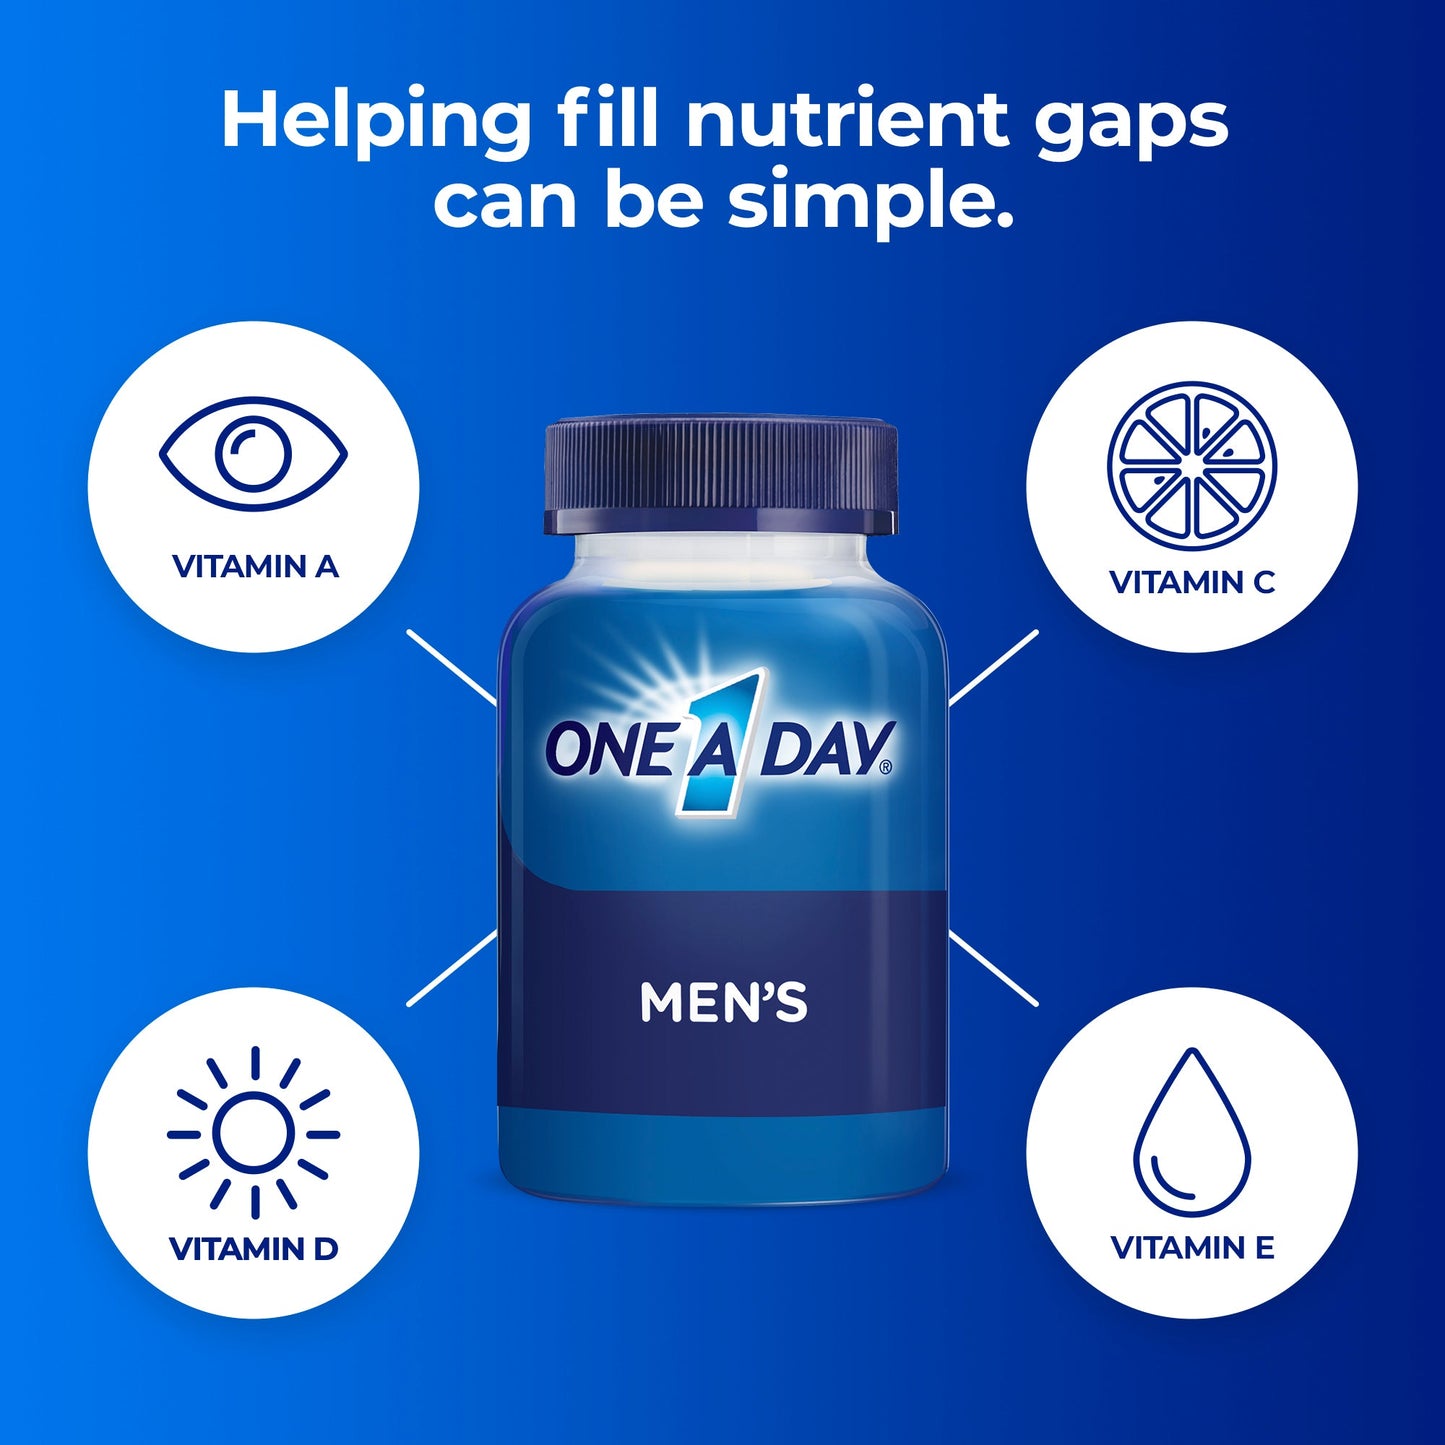 One A Day Men's Multivitamin for Men, 100 Tablets